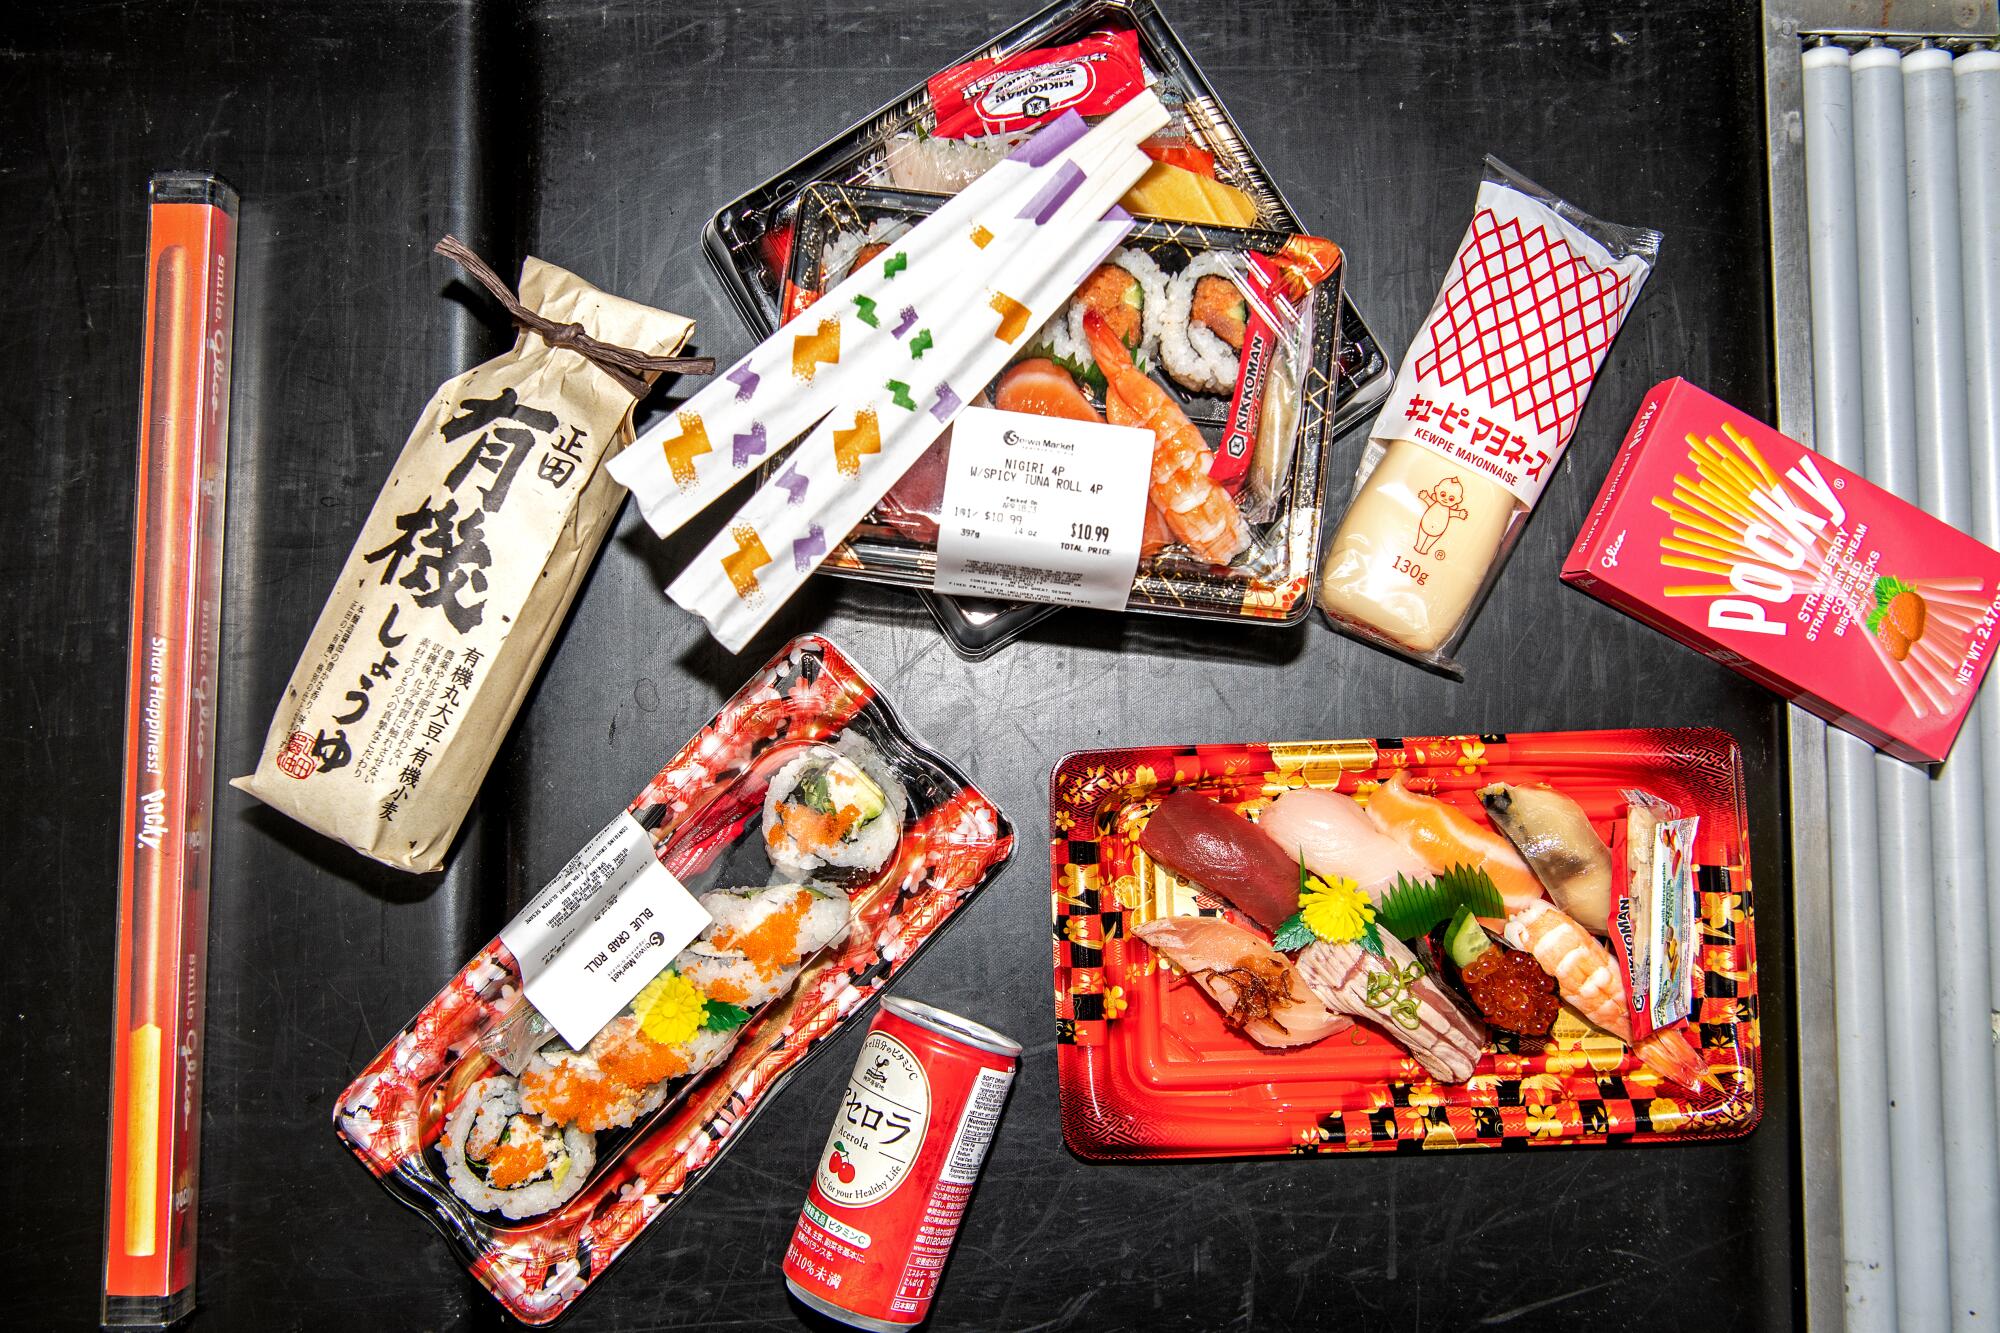 Sushi items from Seiwa Market